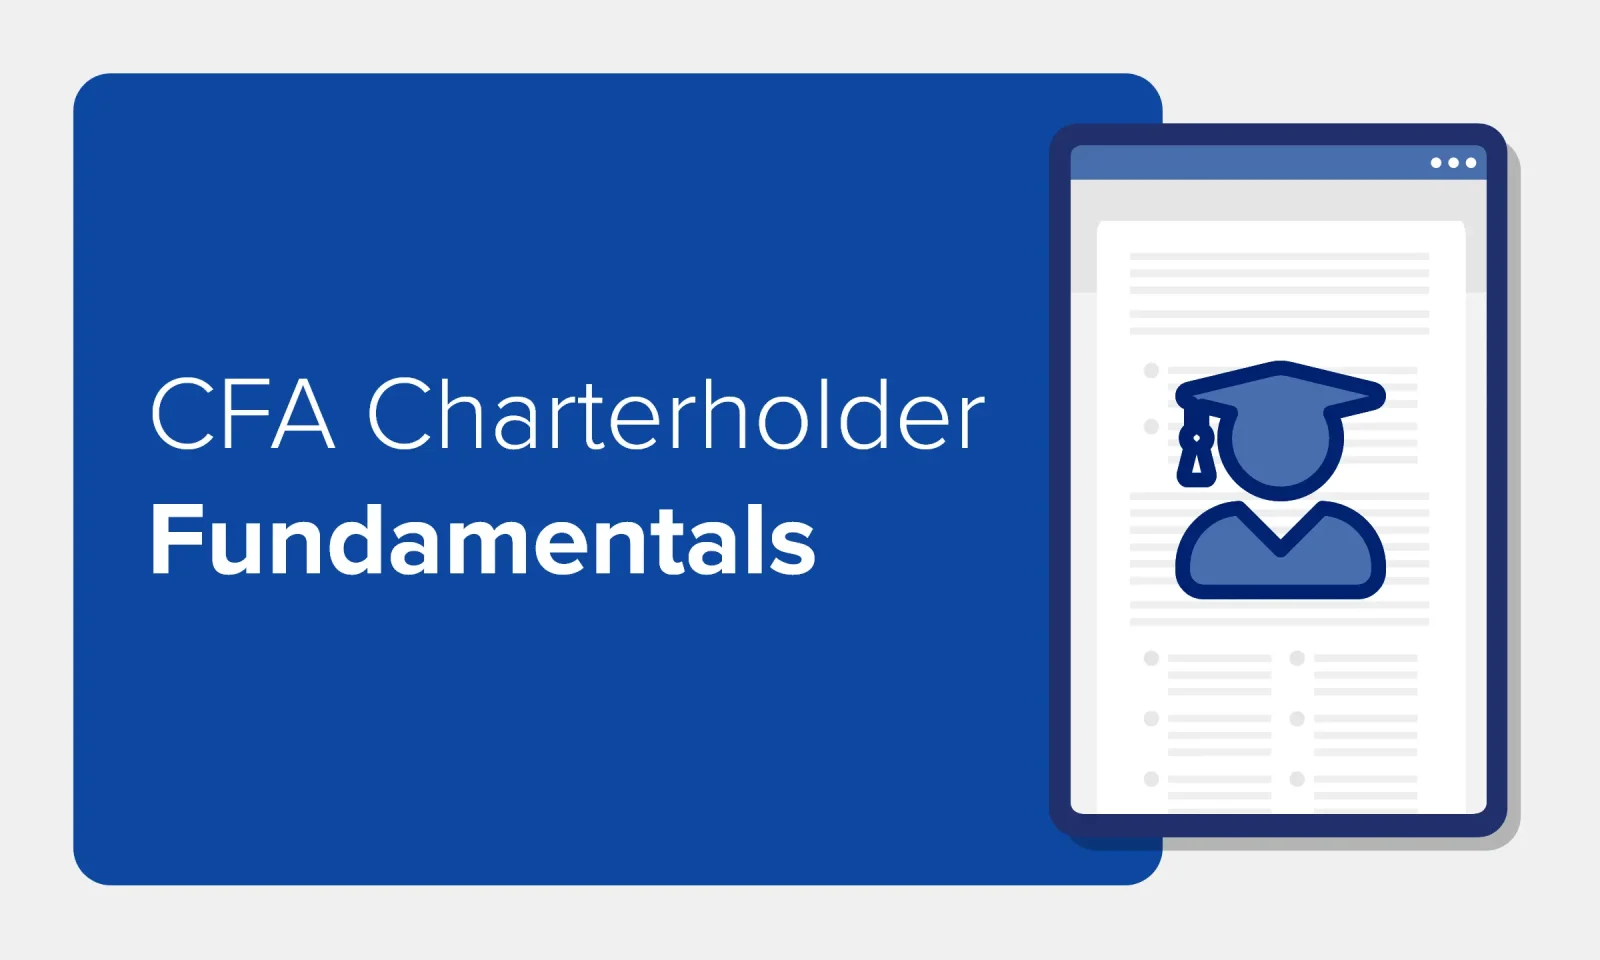 CFA Charterholder Fundamentals